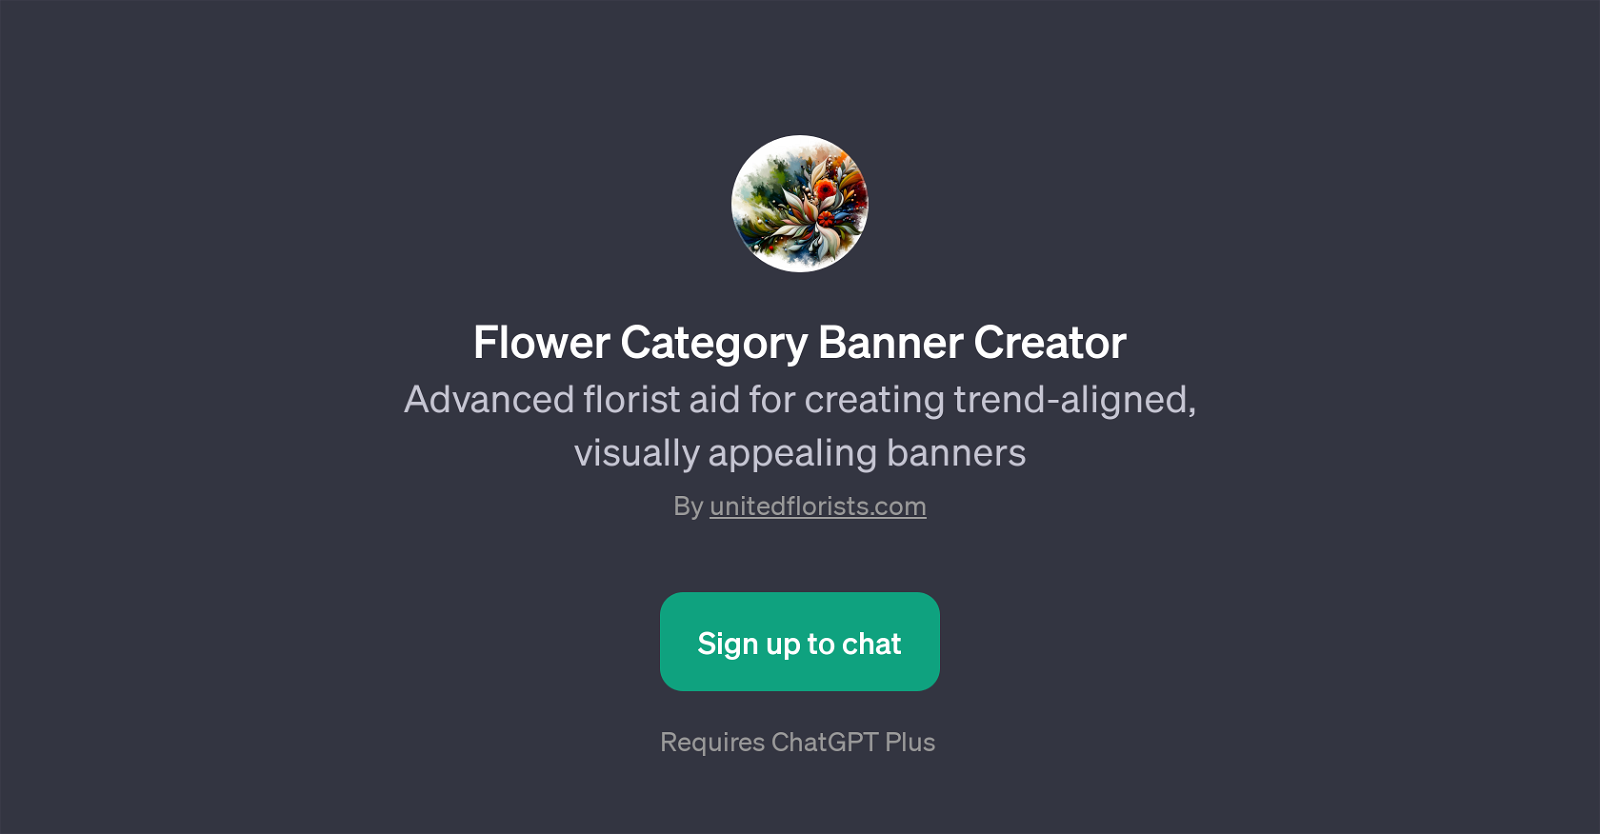 Flower Category Banner Creator website